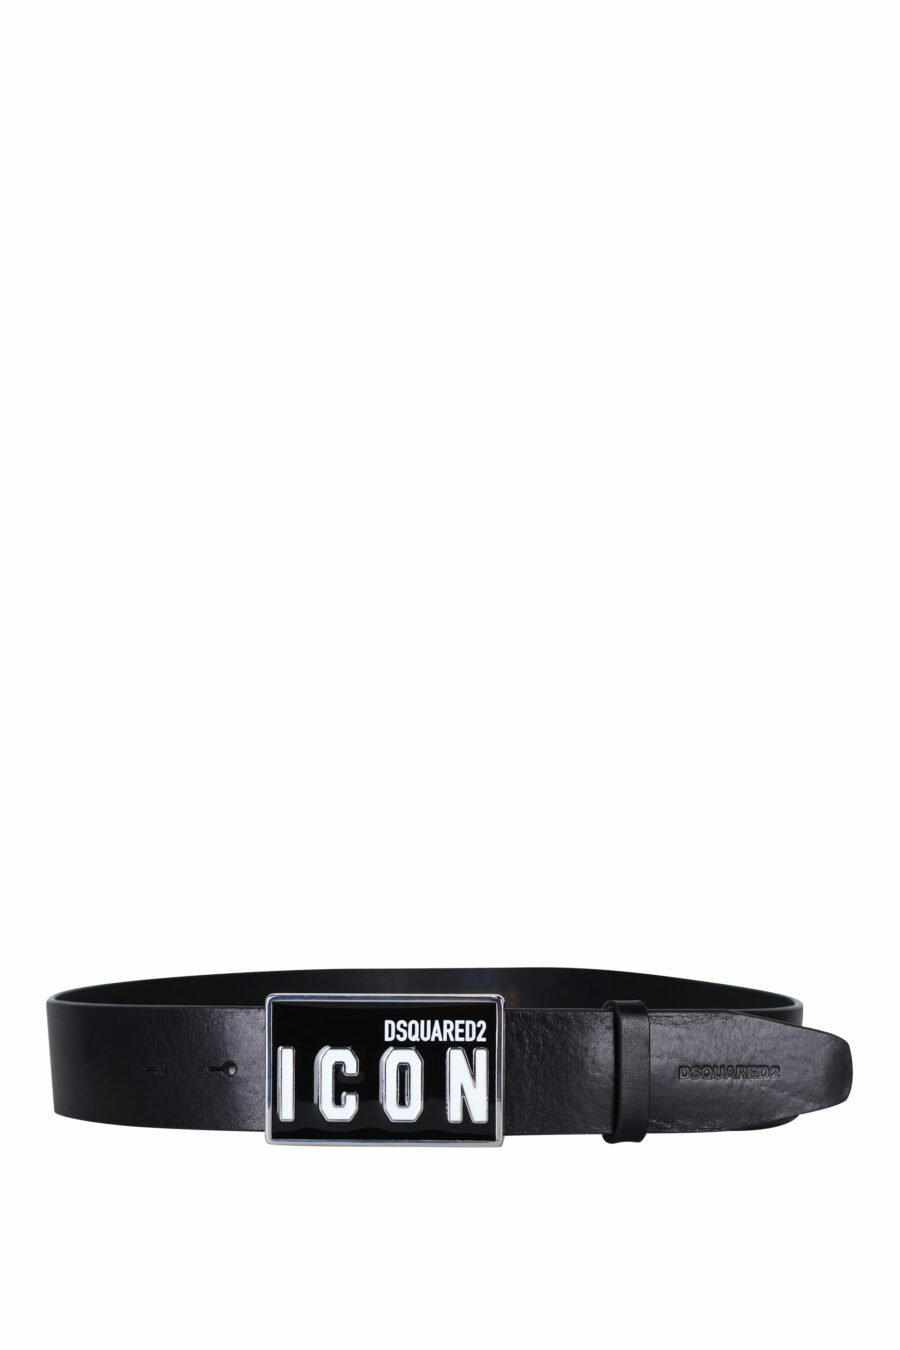 Cinturón negro con minilogo "icon" - 8058097925067